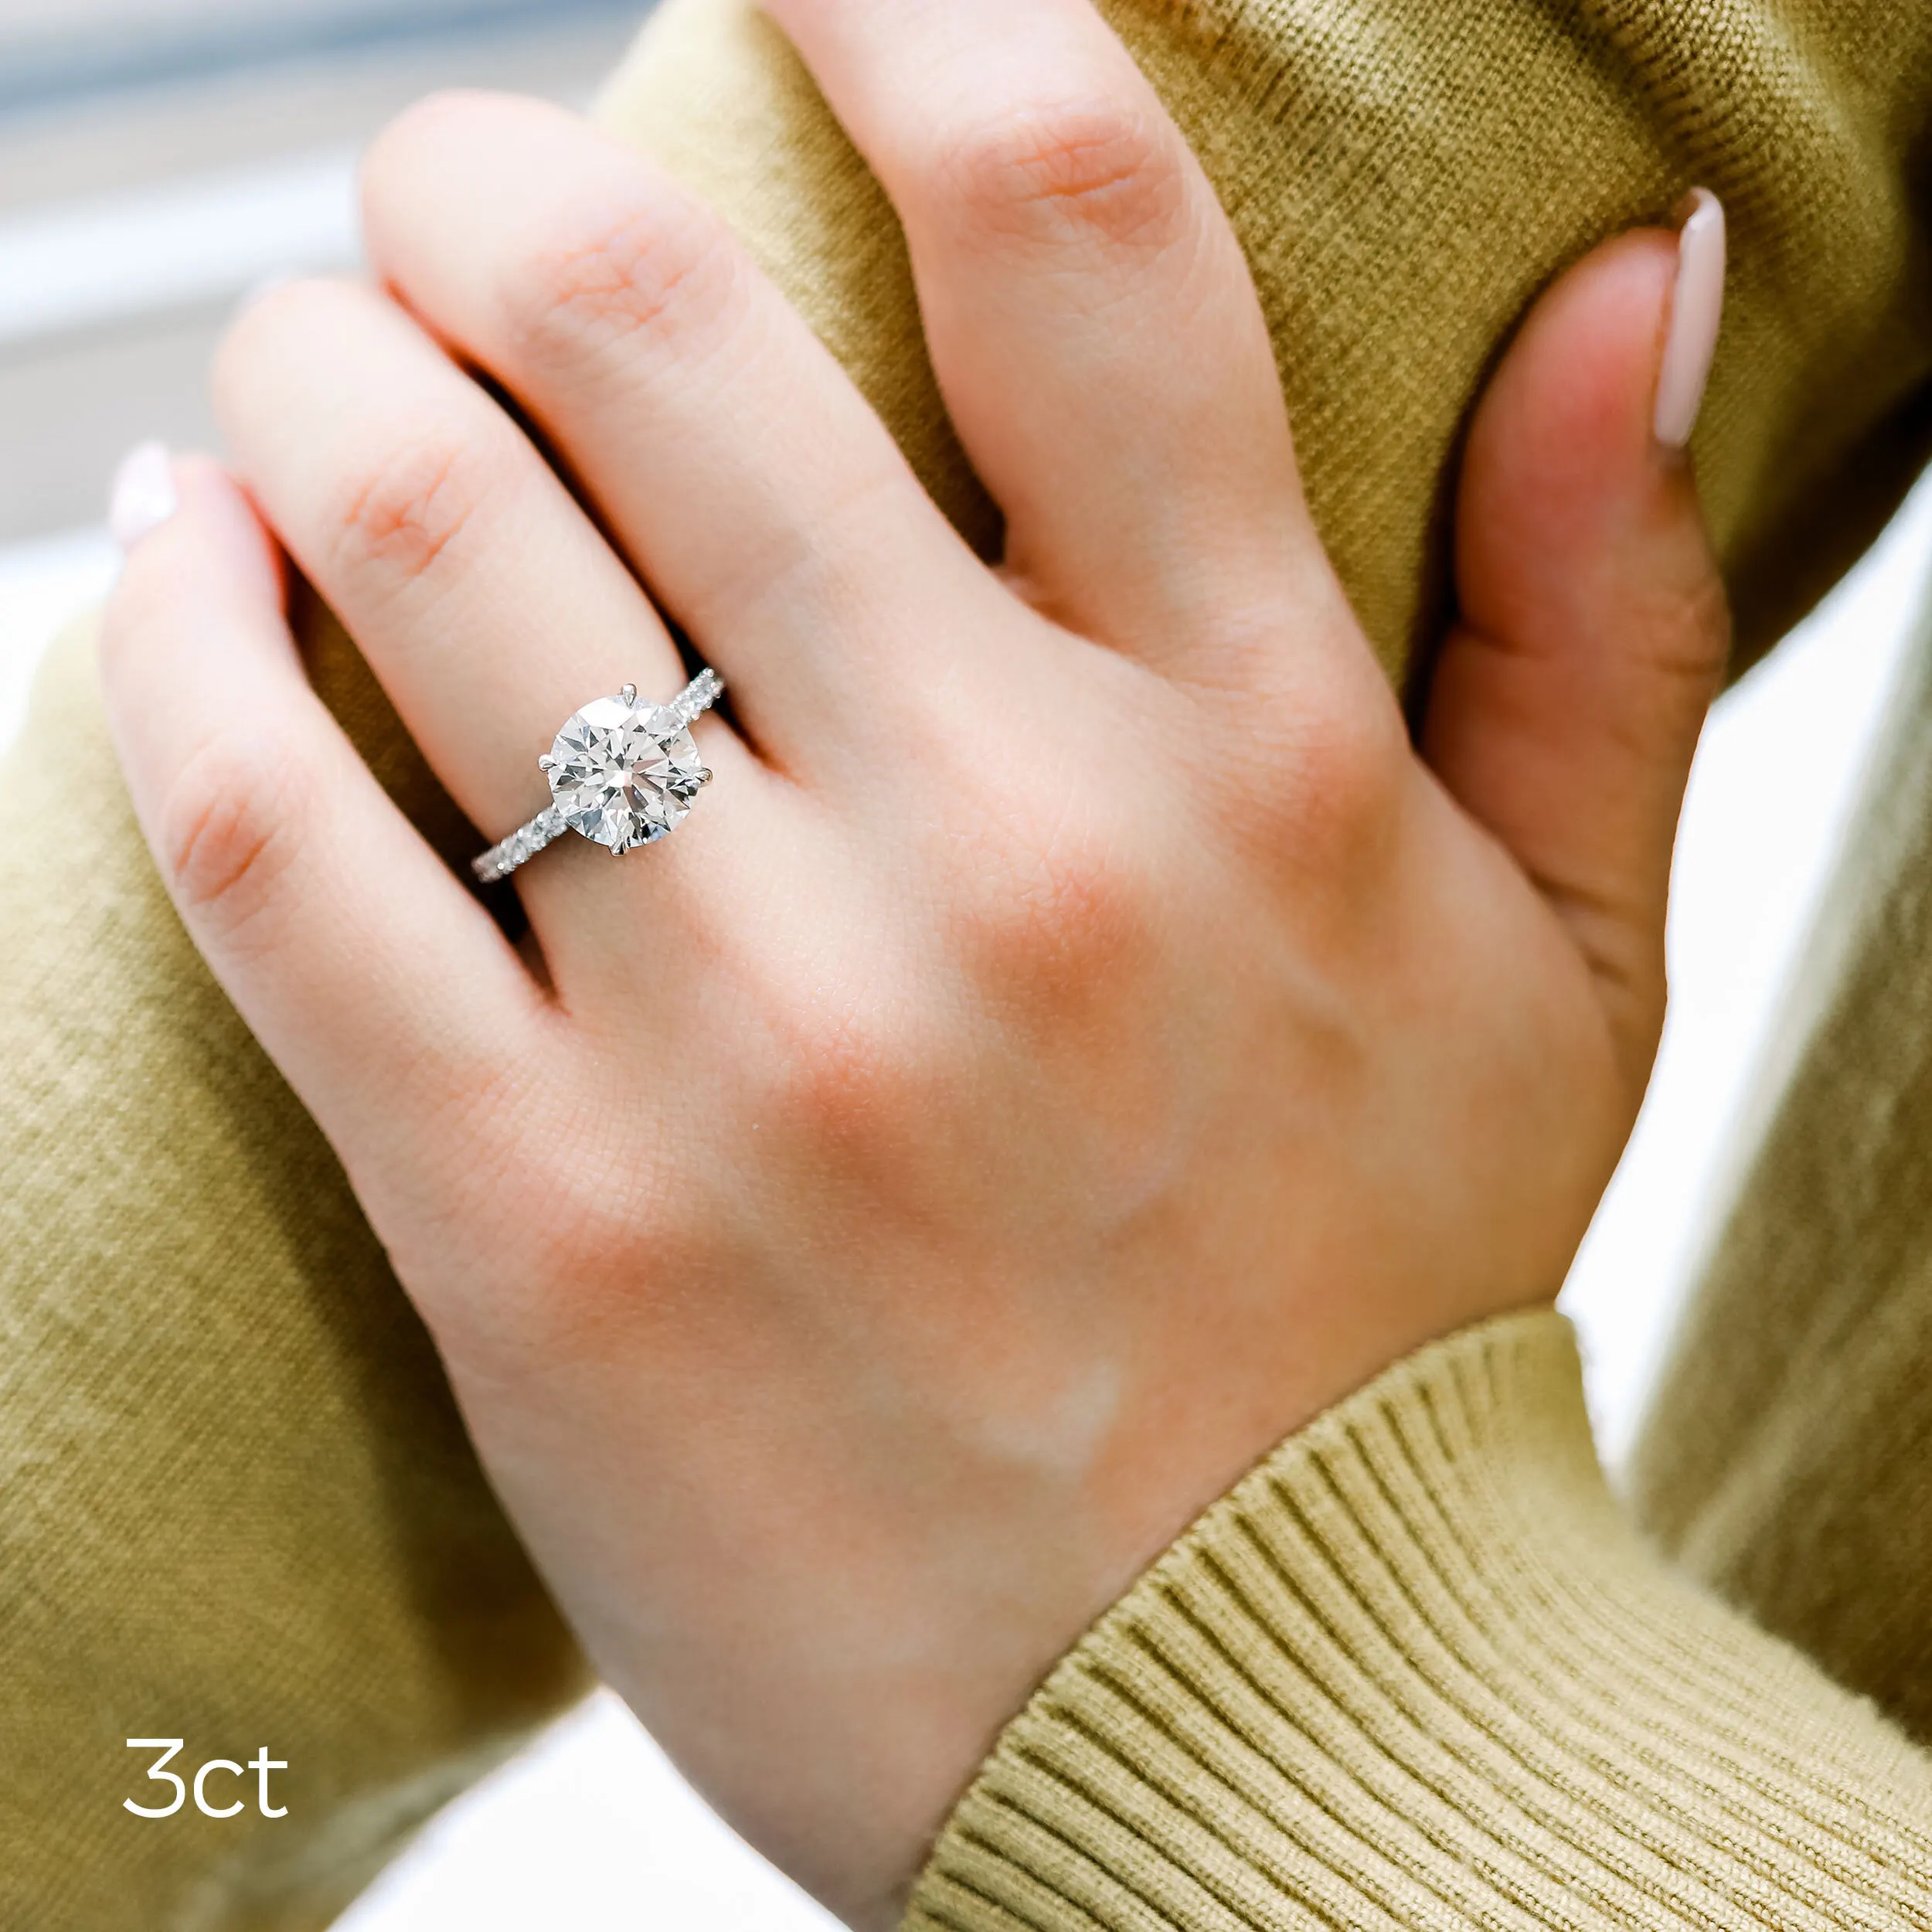 3-carat-lab-diamond-engagement-ring-with-pave-daimonds_1625439879764-33KTV5W0L0Q42U074Z4W